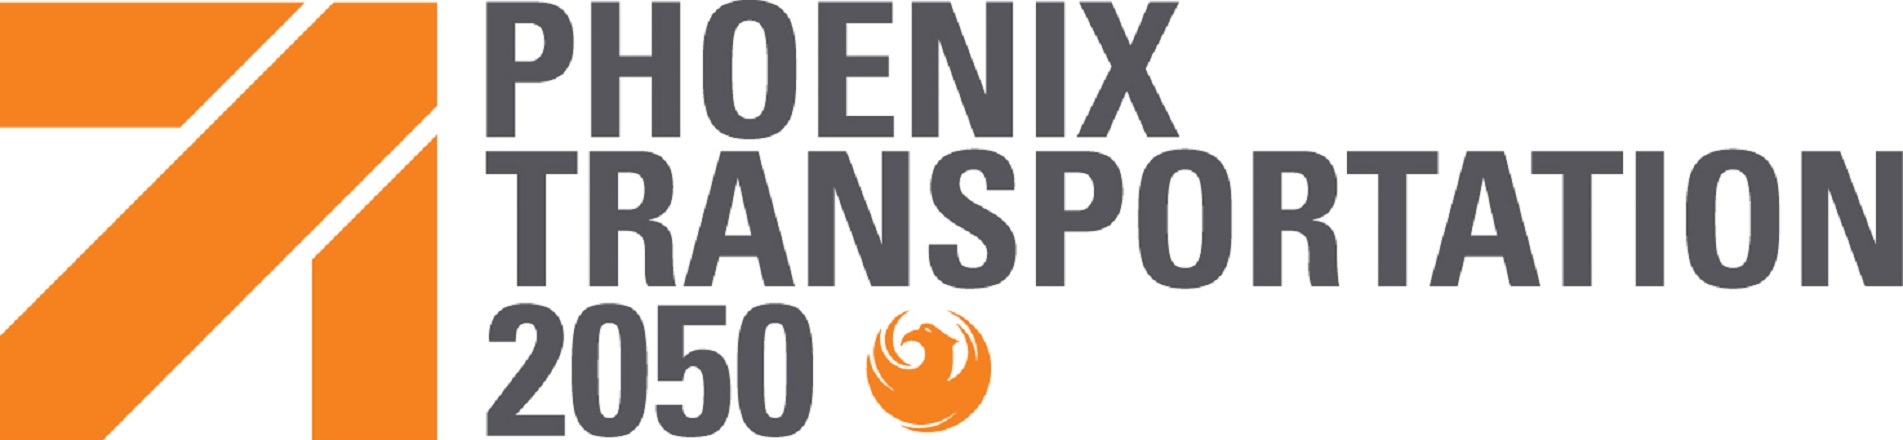 Phoenix Transportation 2050 logo